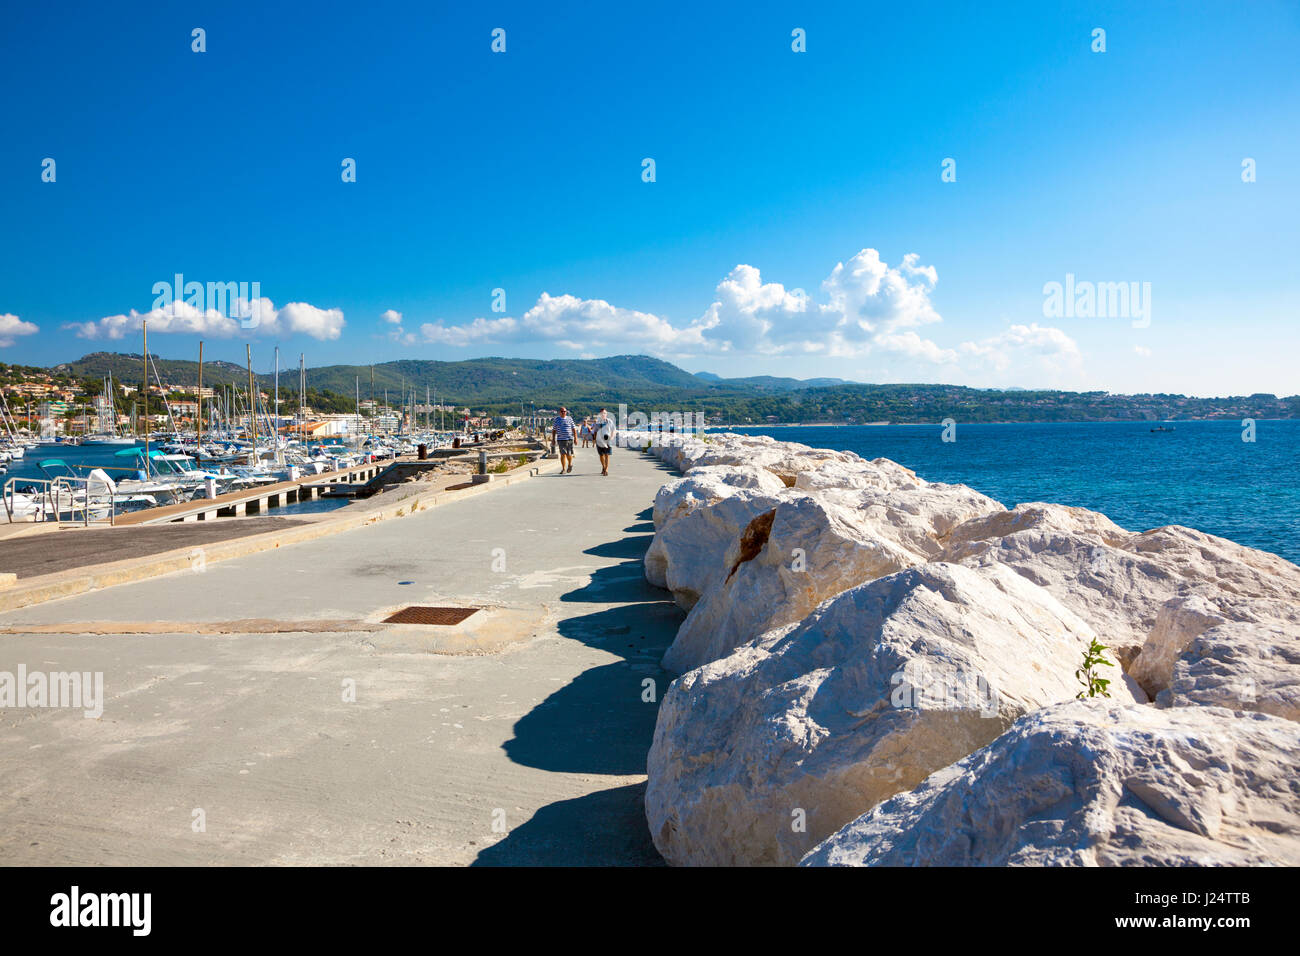 Seaside promenade and boat dock in Bandol, southern France Stock Photo